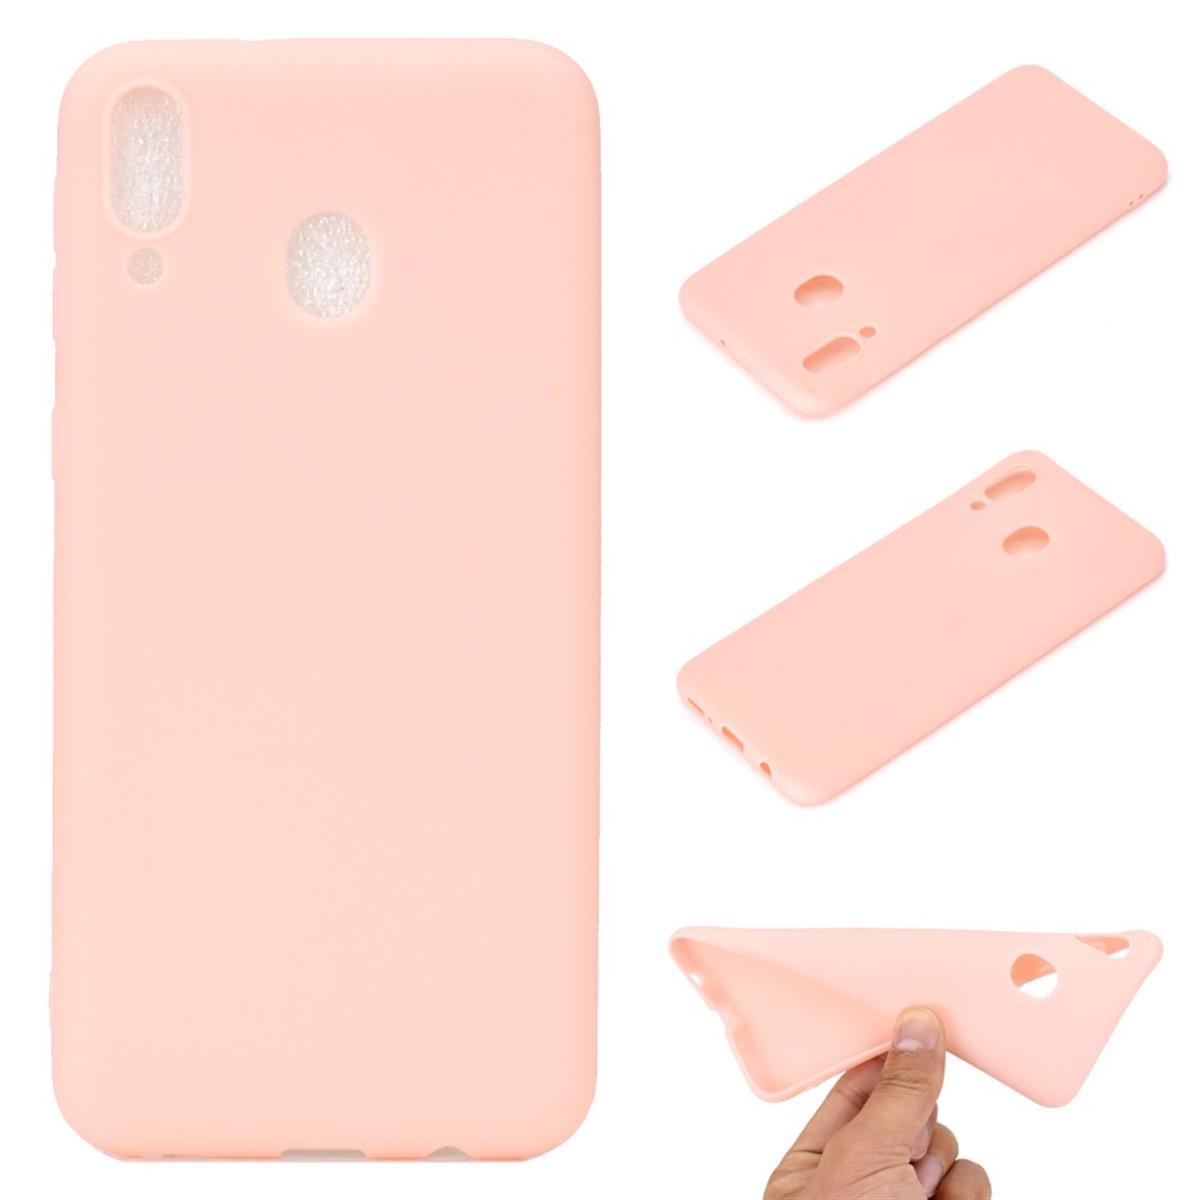 Hülle für Samsung Galaxy A40 Handyhülle Silikon Cover Schutzhülle Soft Case matt Rosa